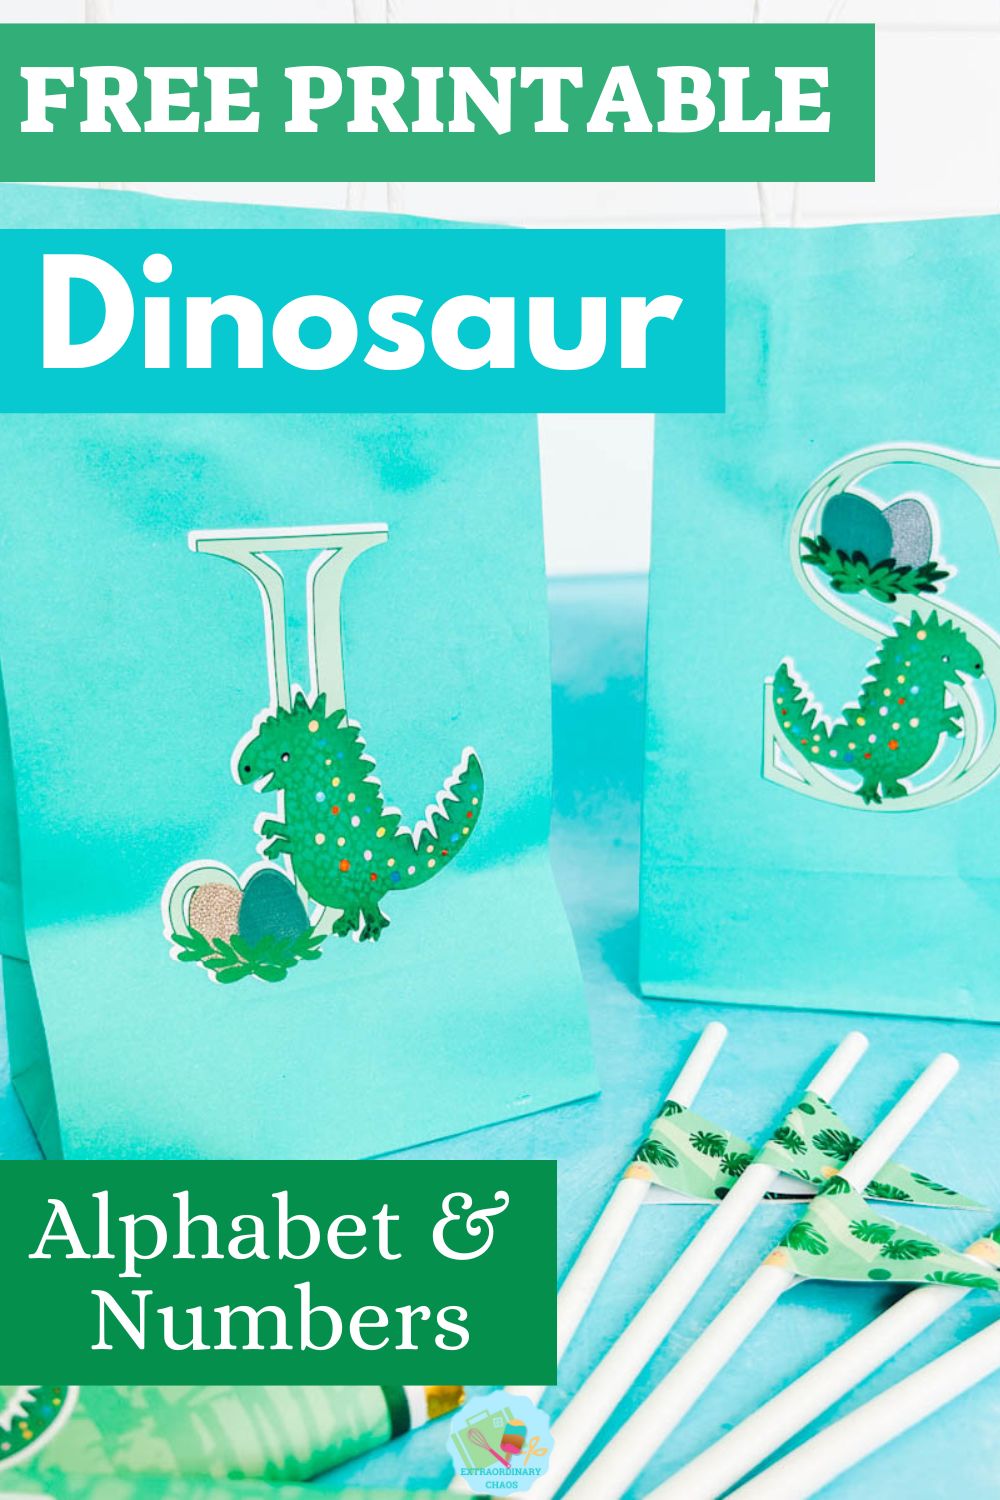 Free printable Dinosaur Alphabet and Number Sets